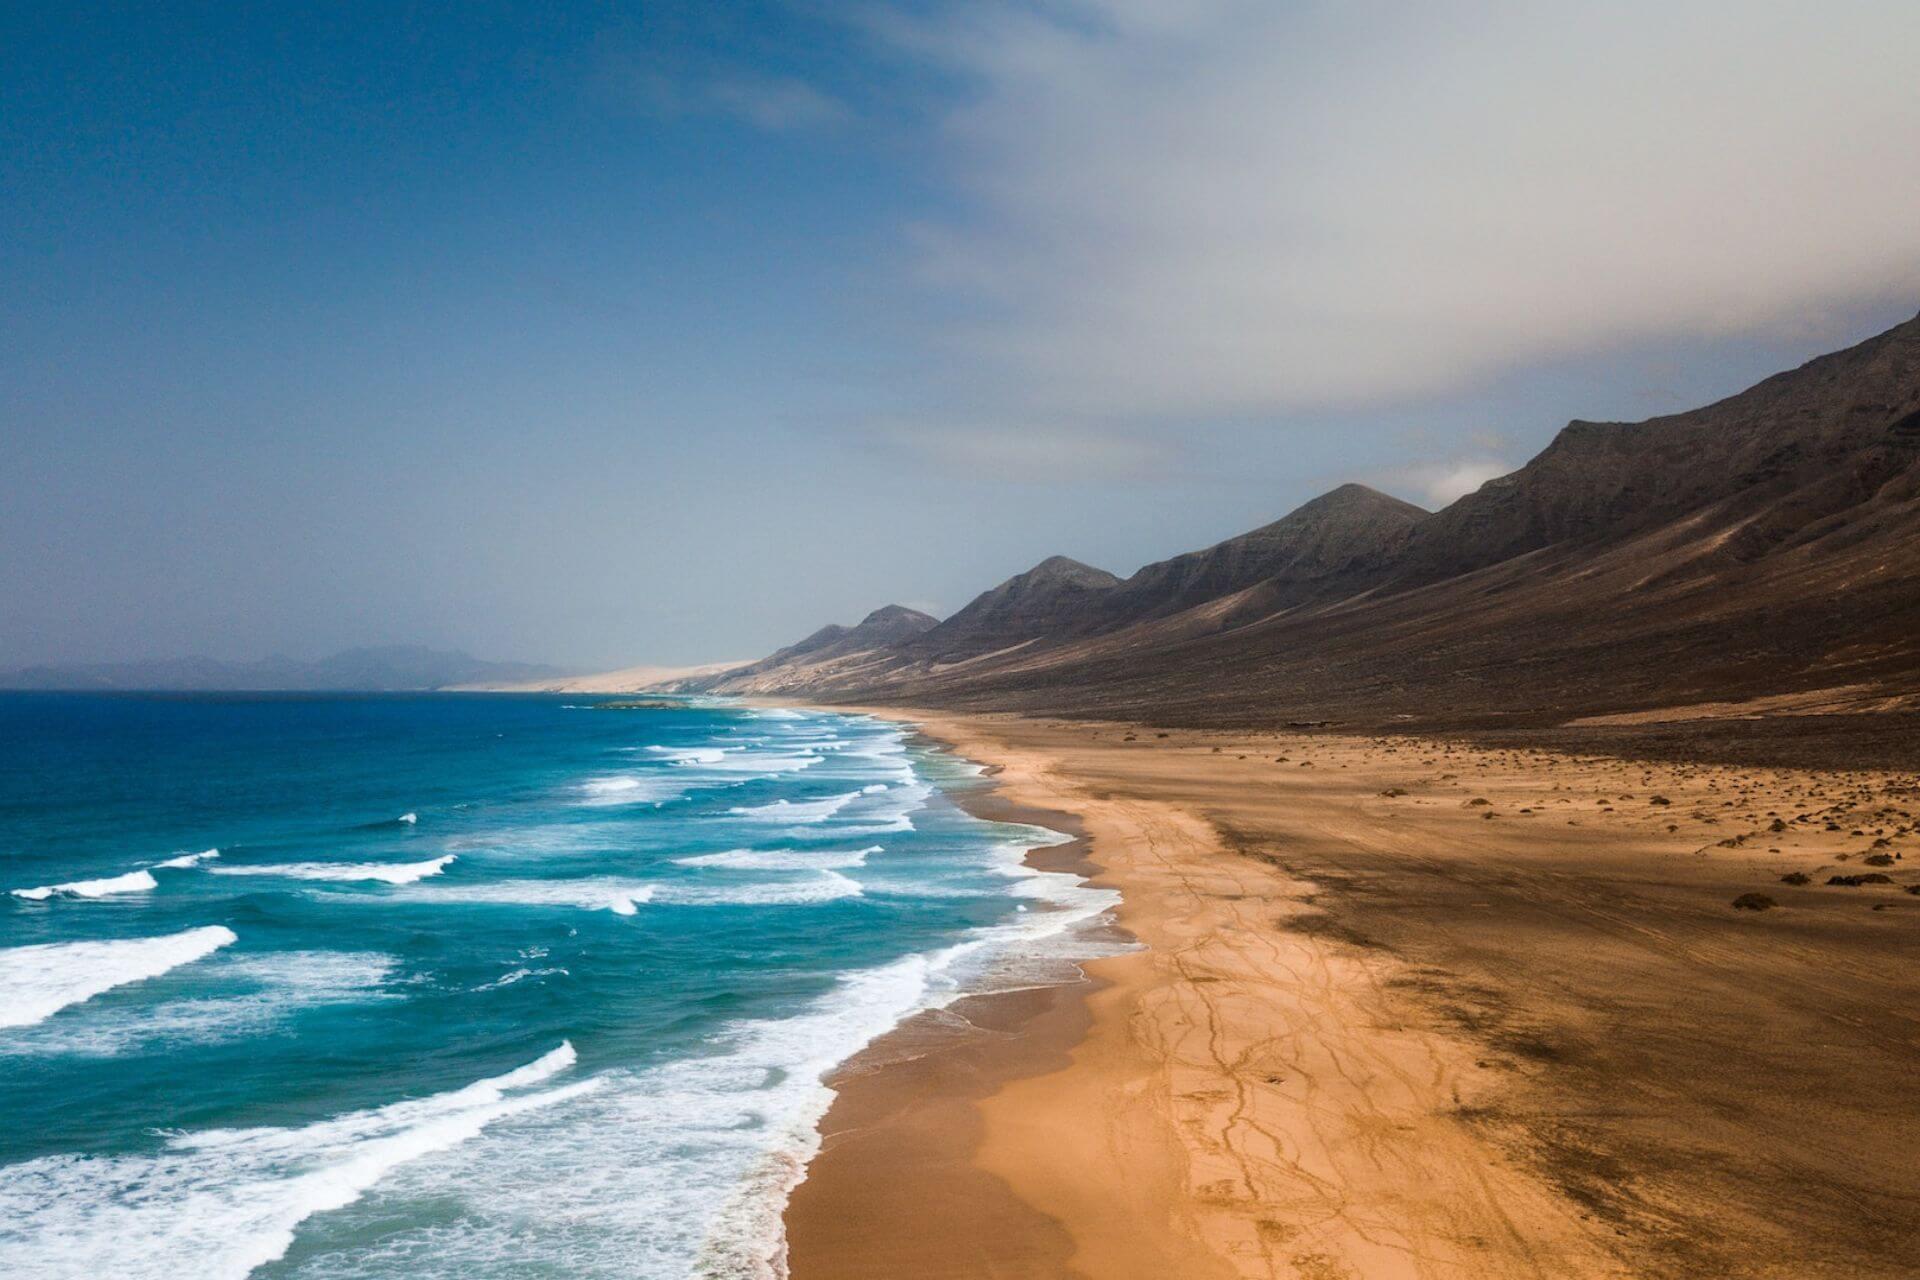 View of dunes, beach, mountains and sea, Fuerteventura